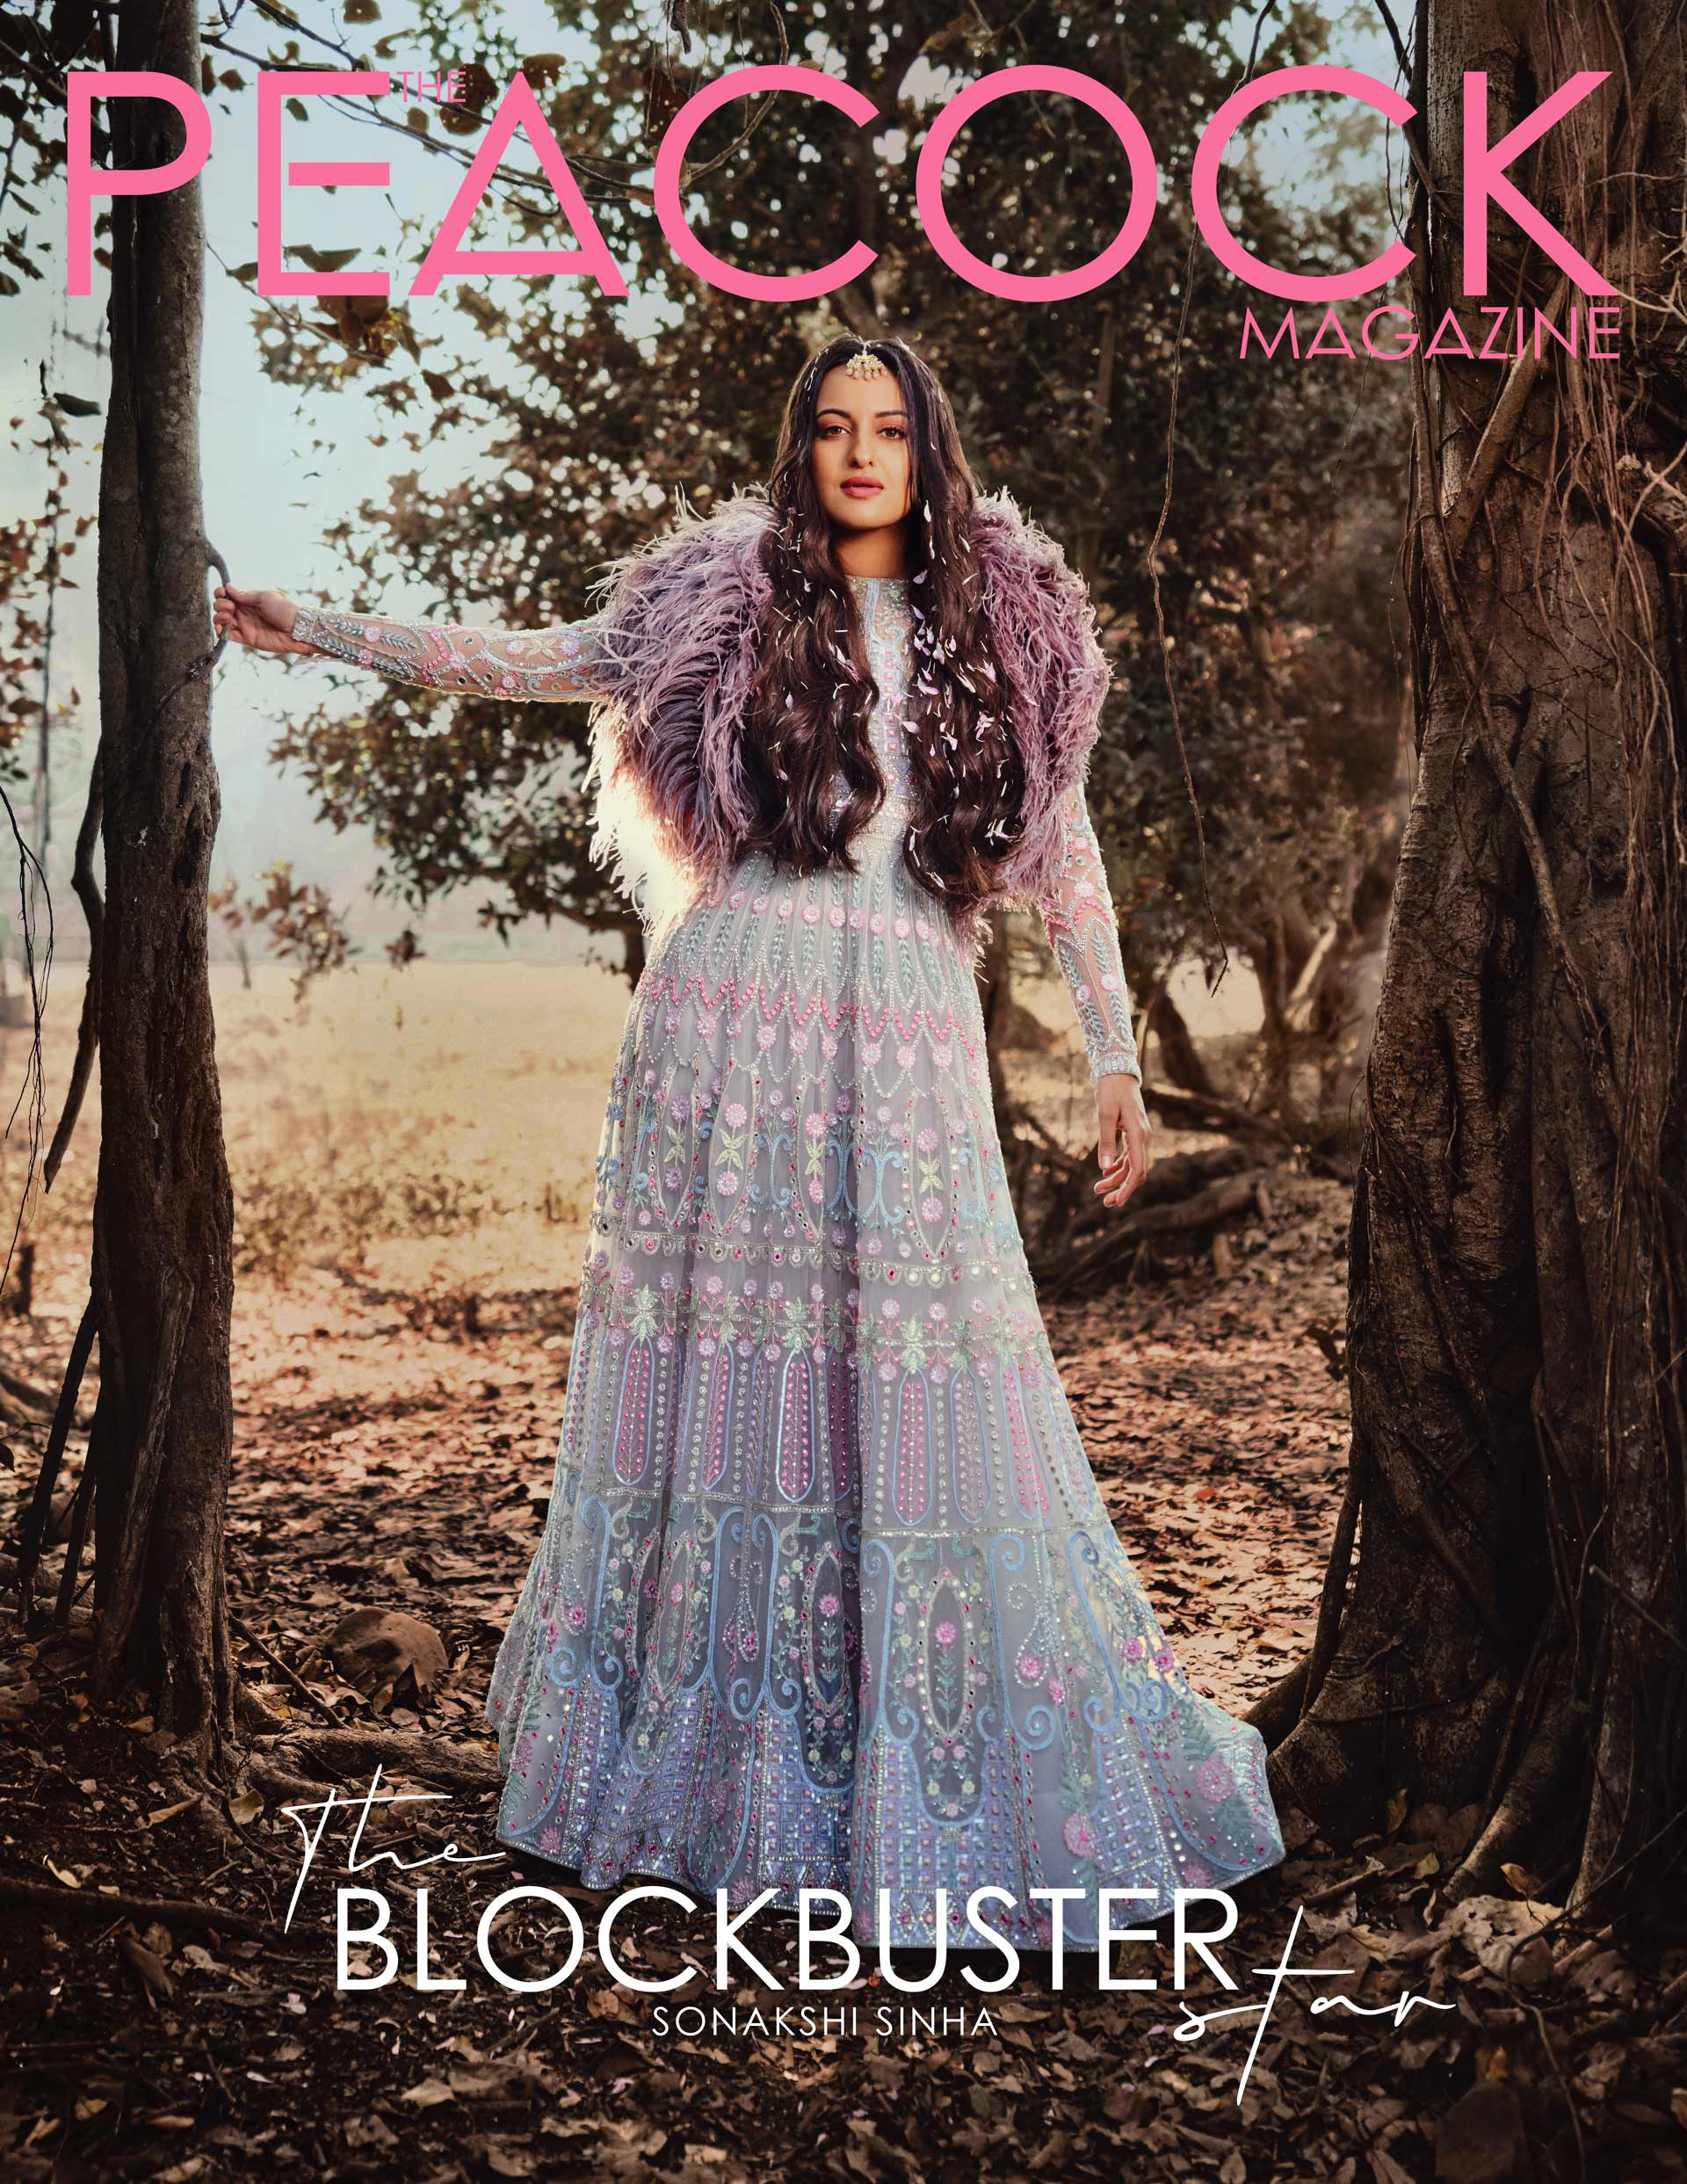 THE BLOCKBUSTER STAR - SONAKSHI SINHA - The Peacock Magazine